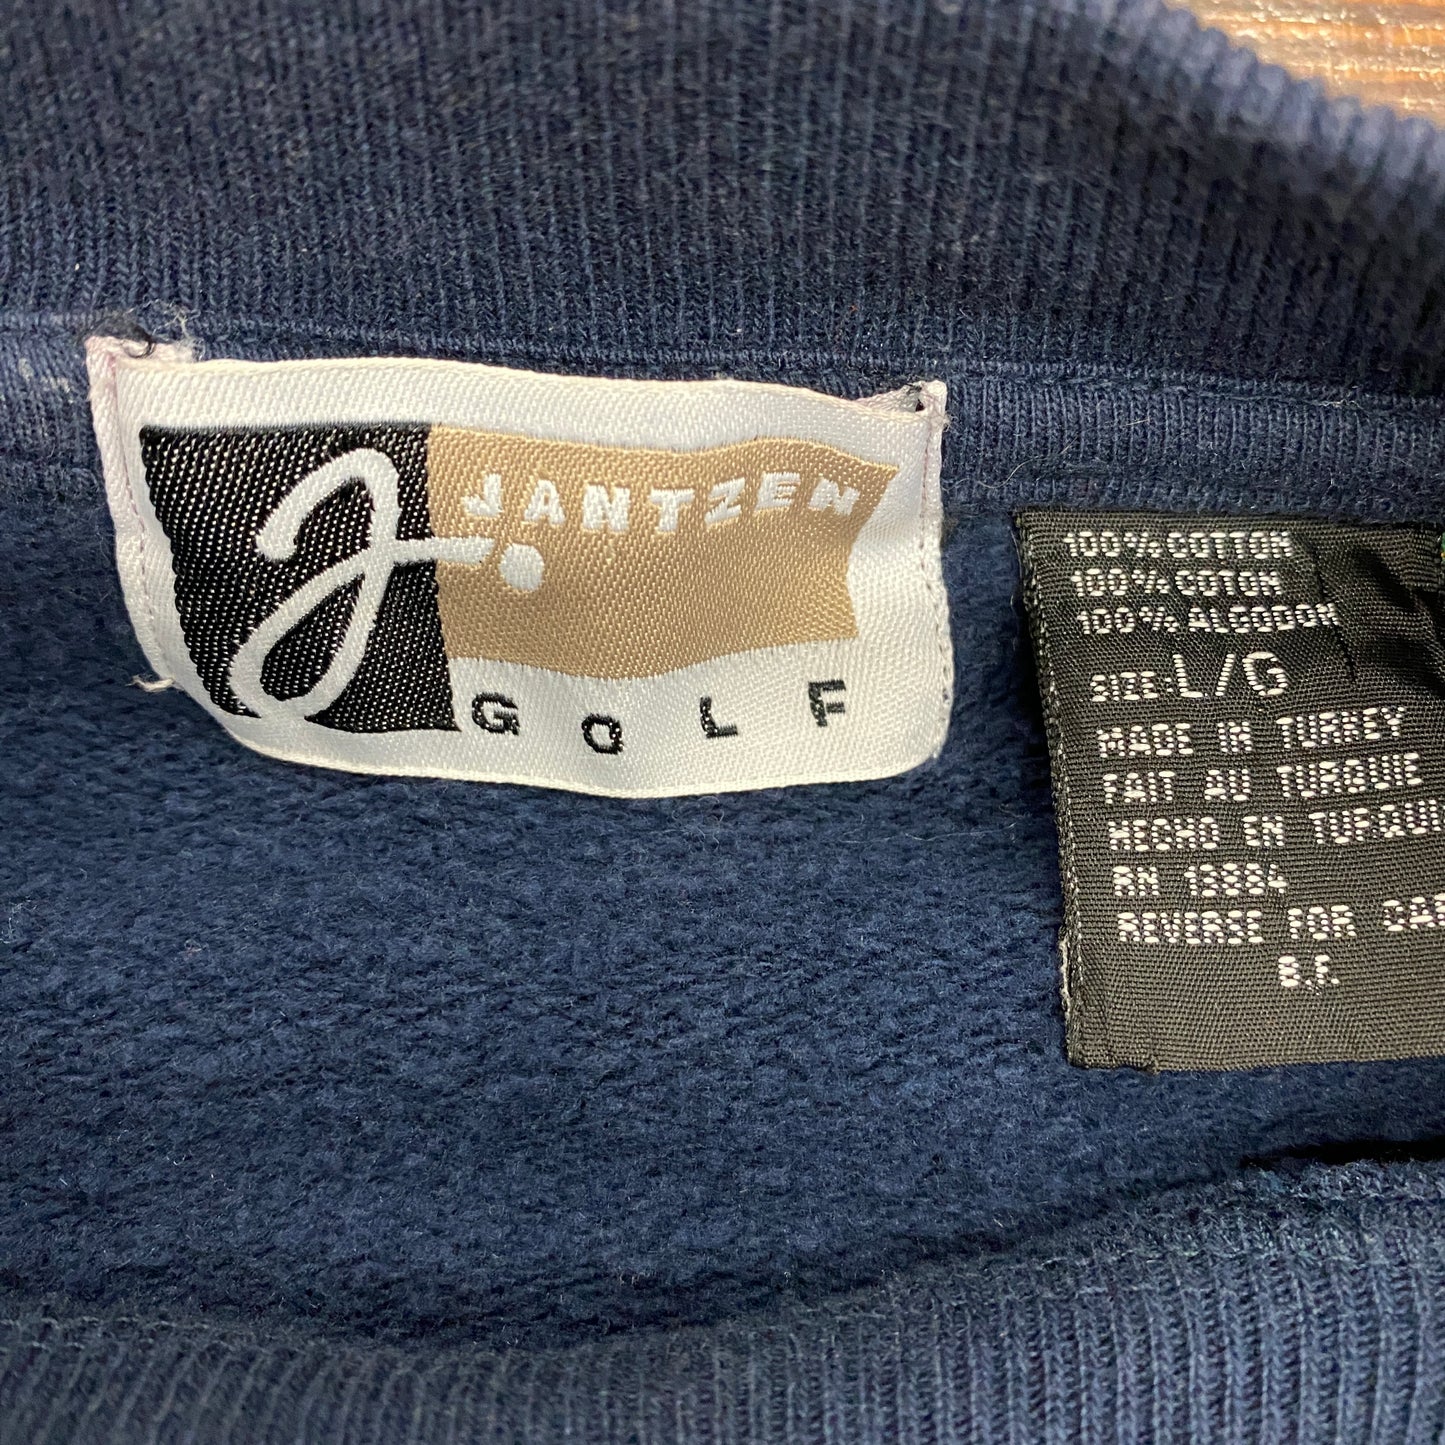 1990s Jantzen Golf Embroidered Crewneck Sweatshirt - Size Large